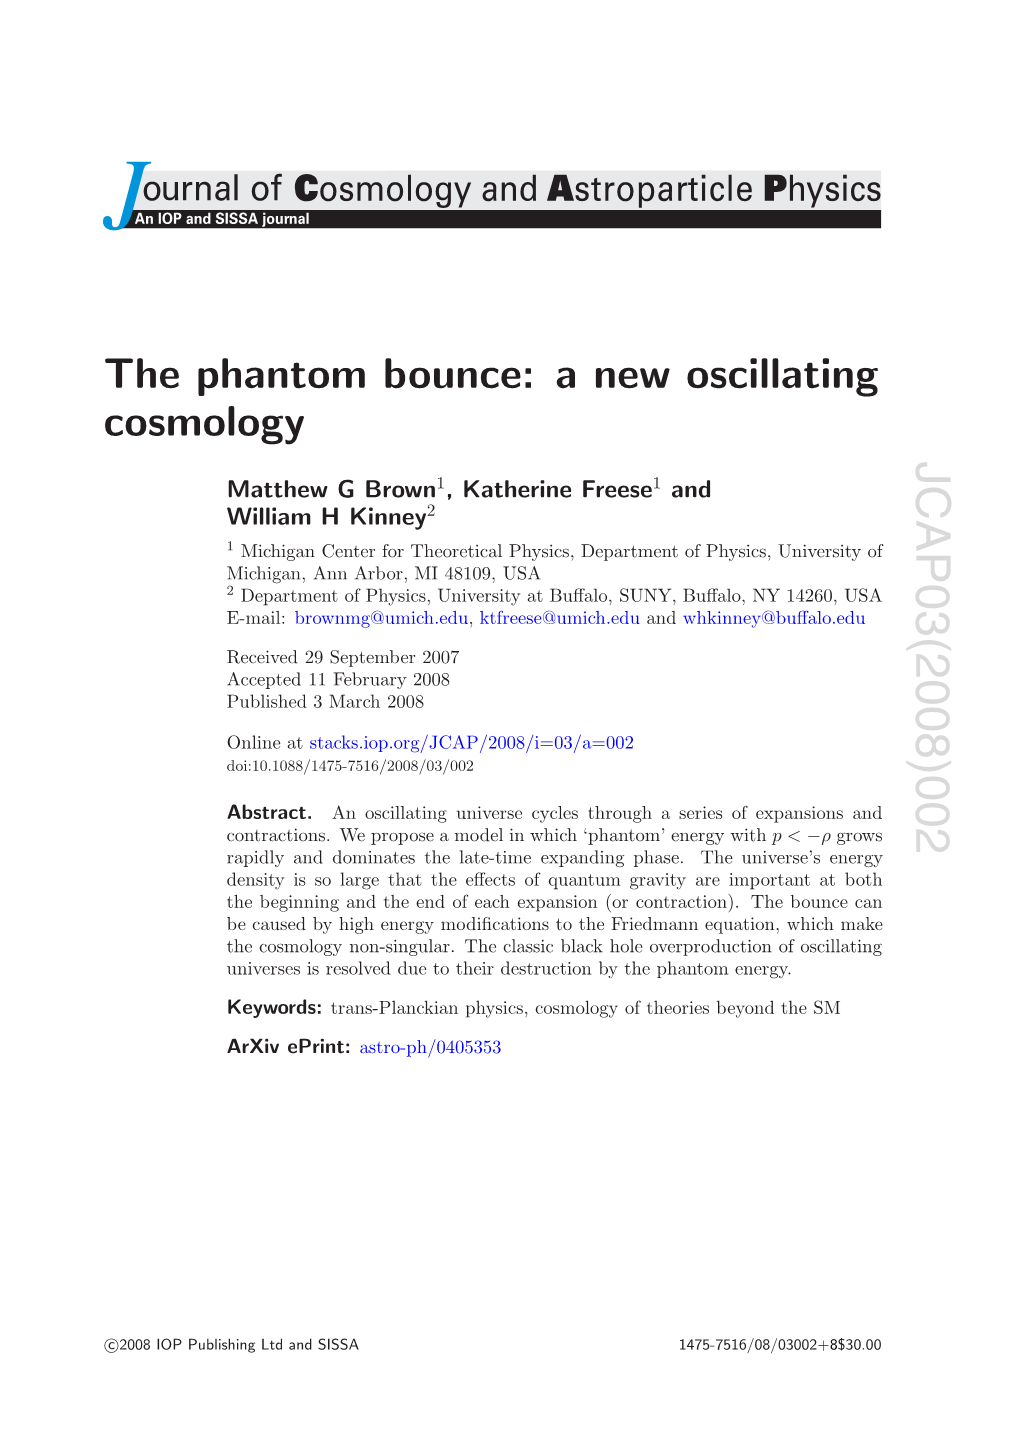 The Phantom Bounce: a New Oscillating Cosmology